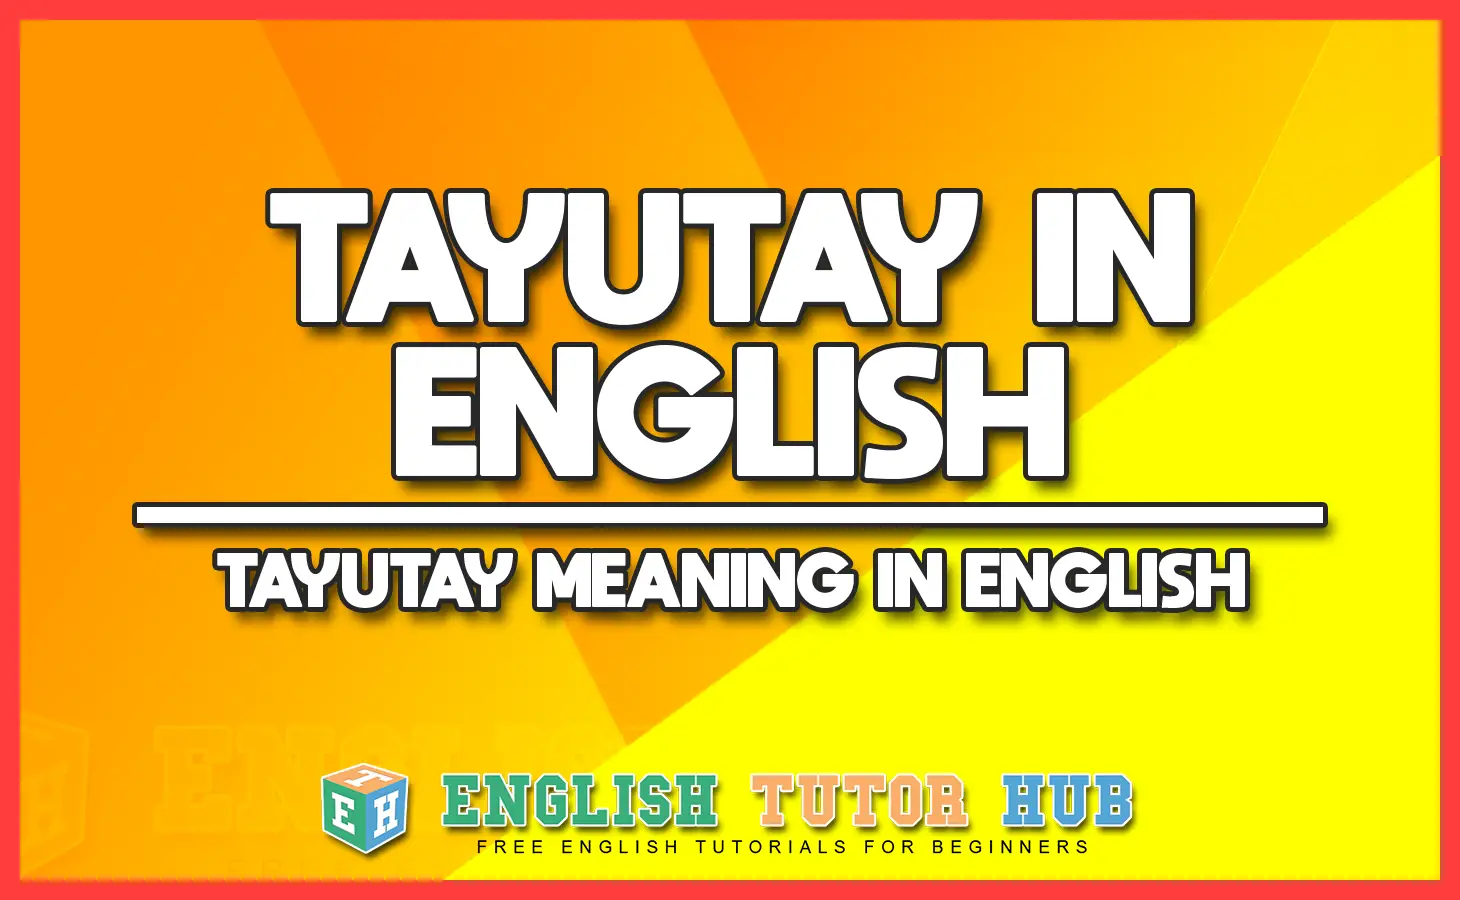 TAYUTAY IN ENGLISH - TAYUTAY MEANING IN ENGLISH